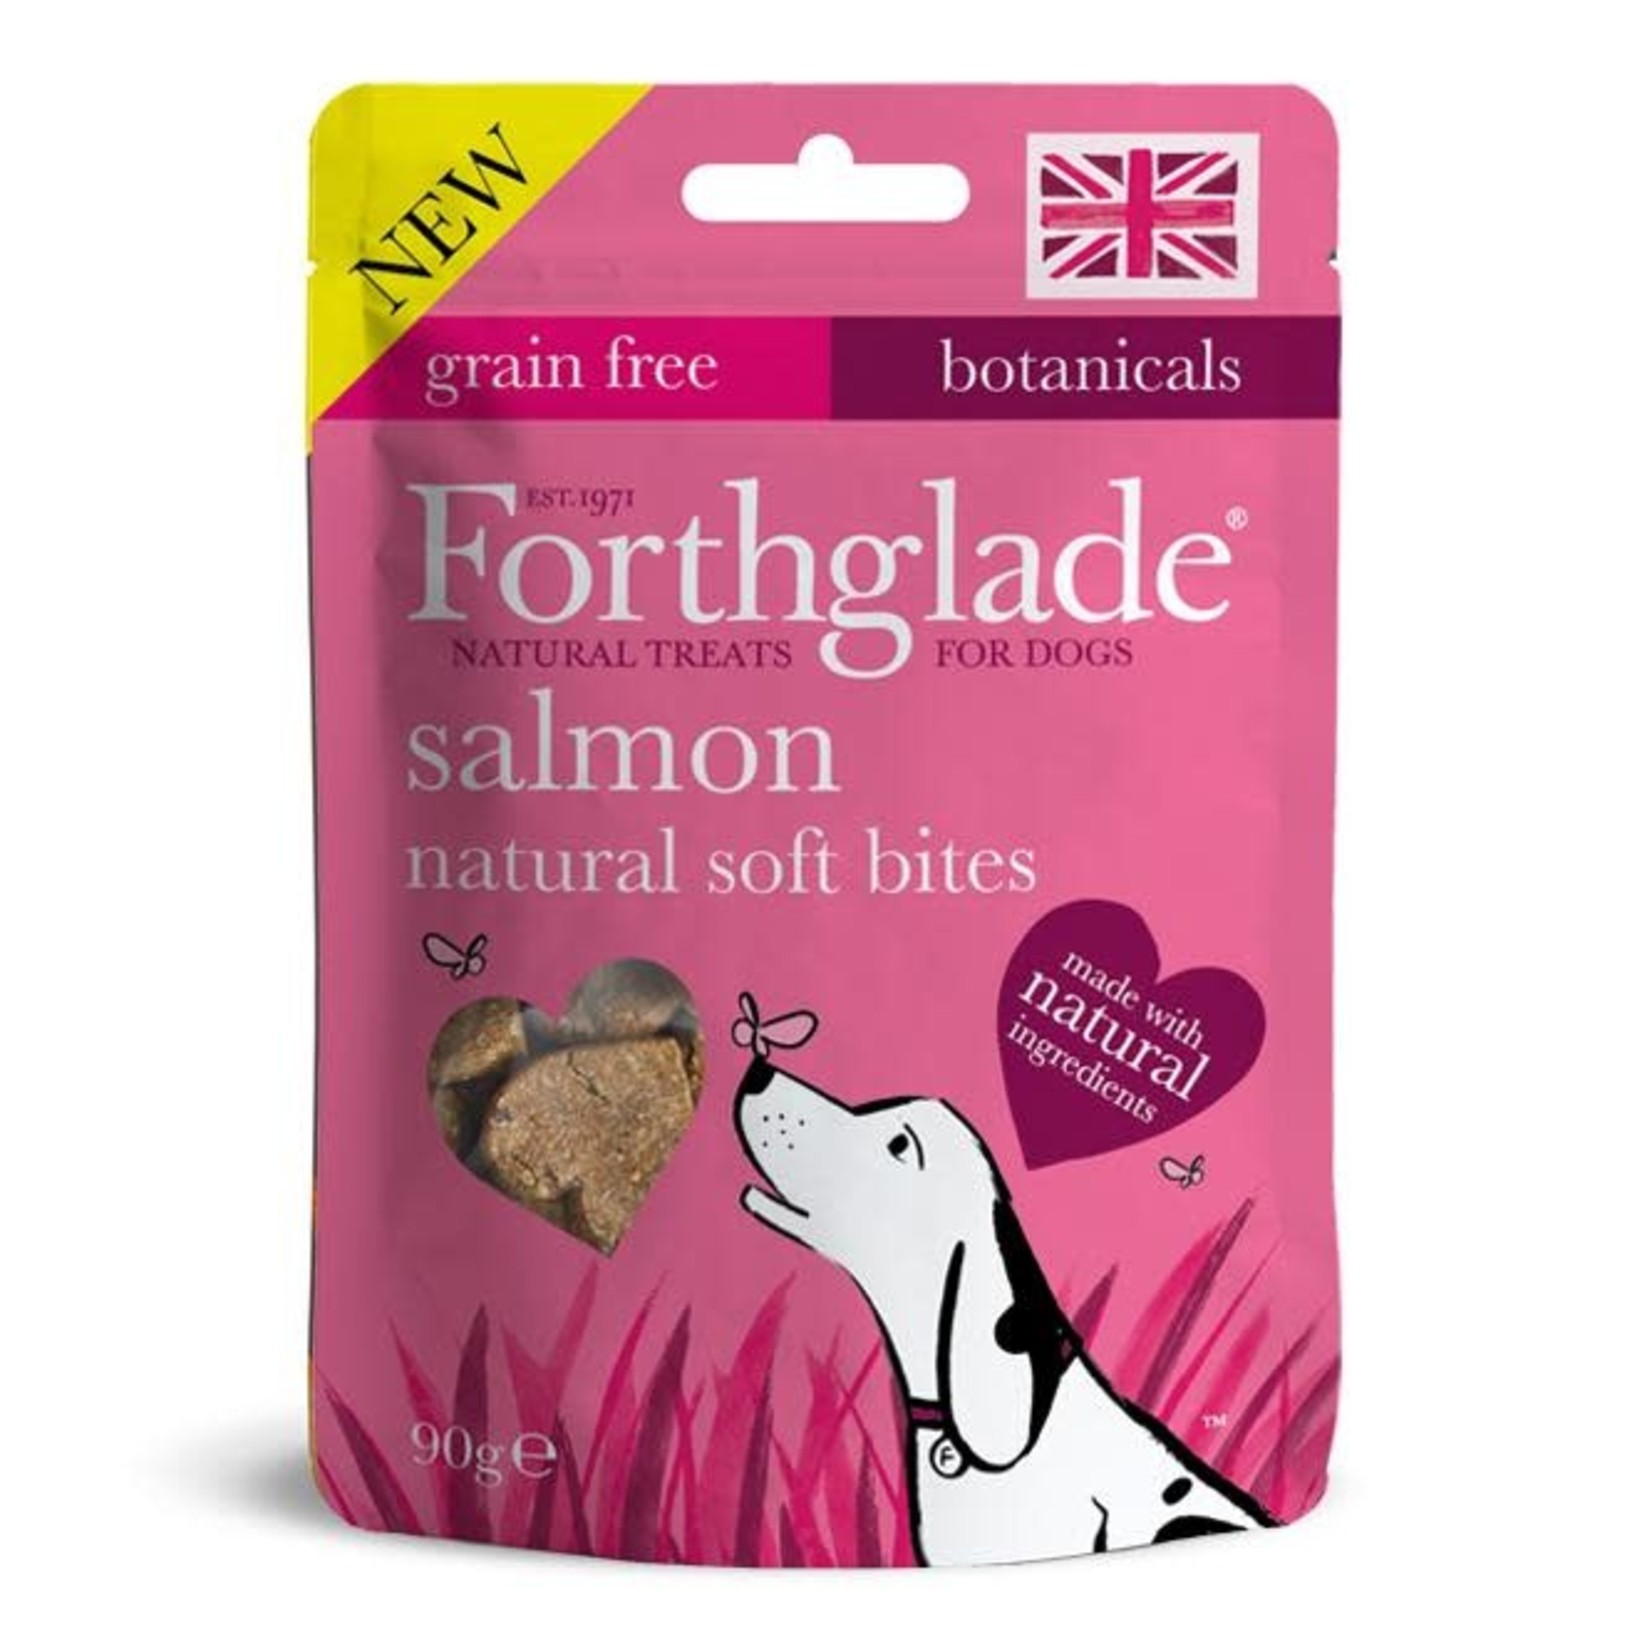 Forthglade Natural Soft Bites Salmon Dog Treats, 90g